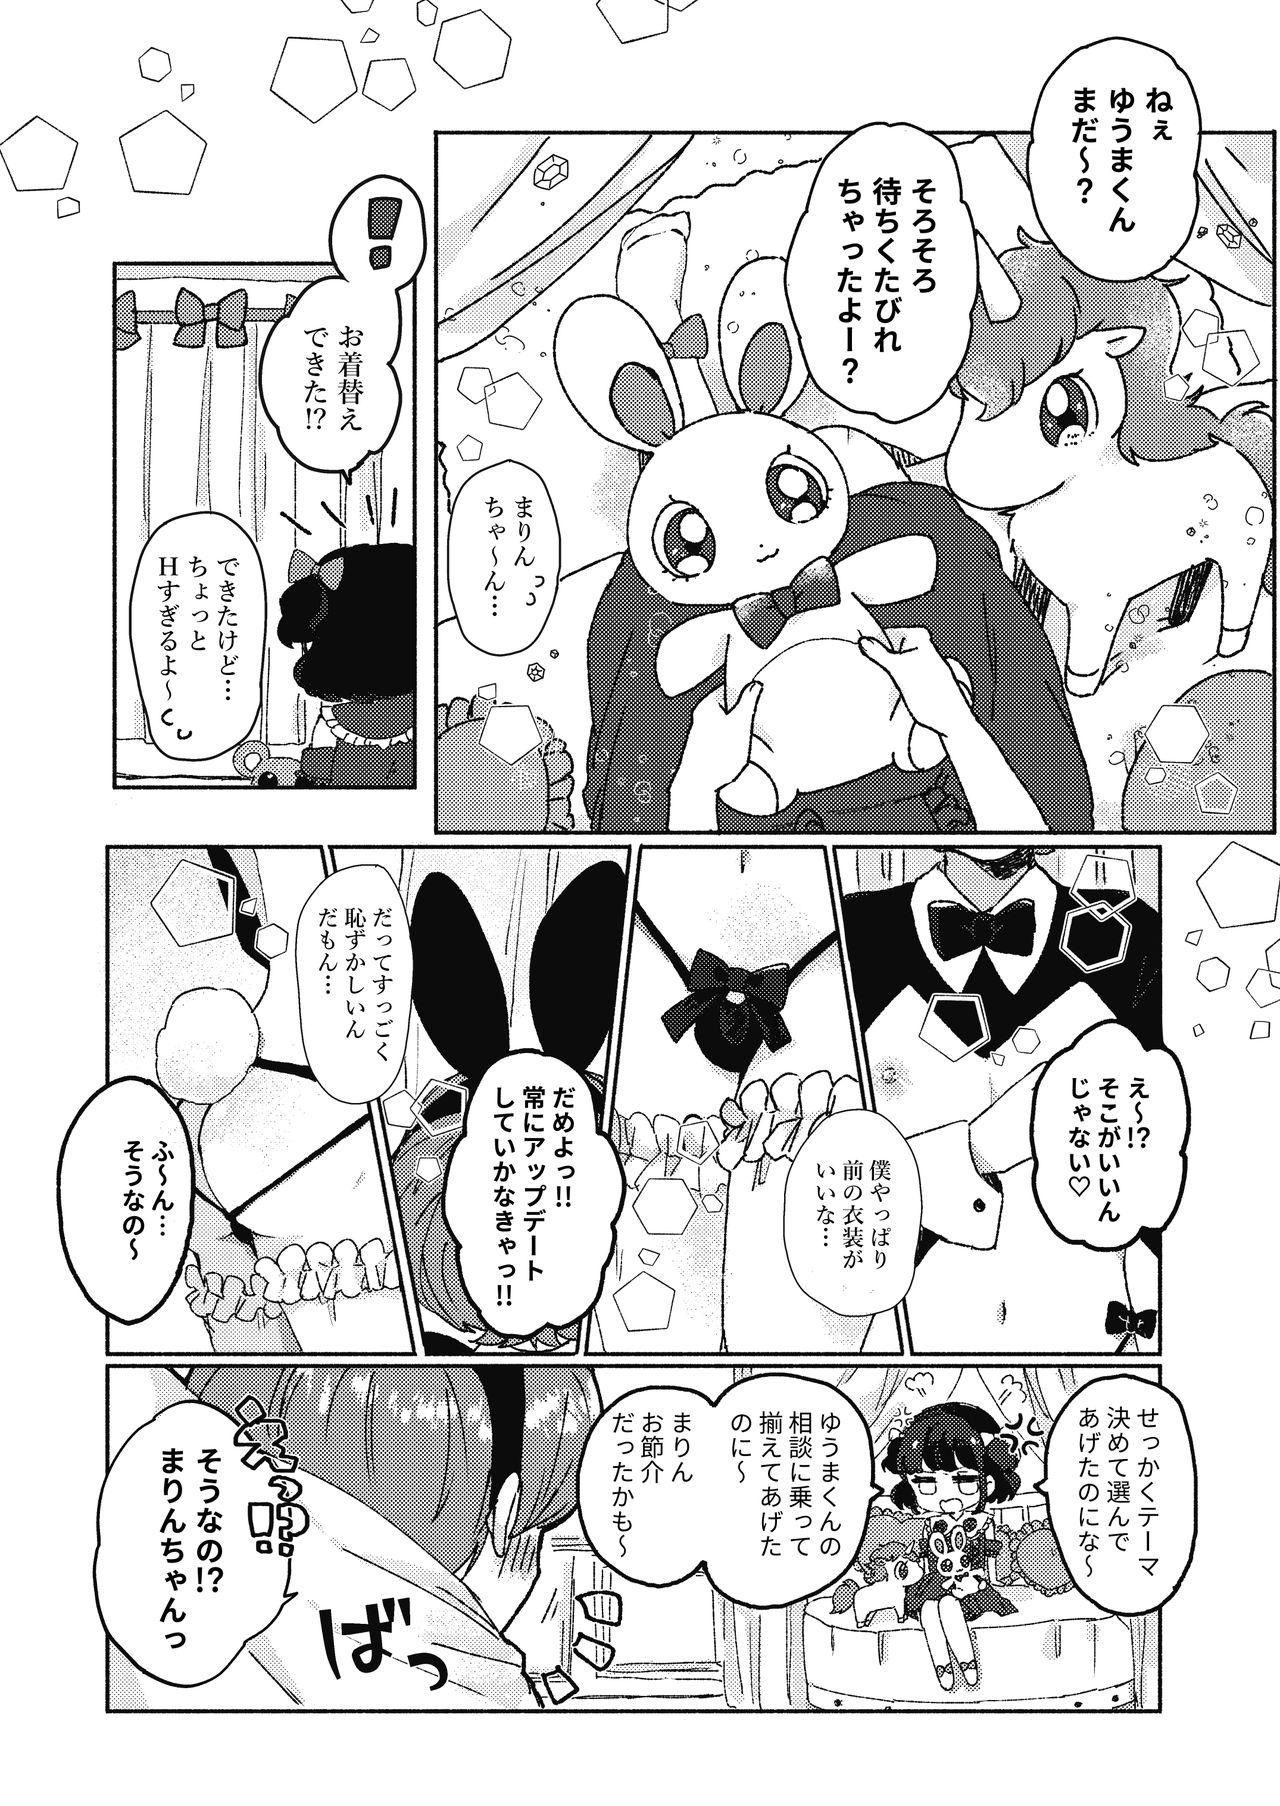 Family Sakasama Usagi o Hitorijime - Upside down rabbit all to yourself - Original Plumper - Page 6